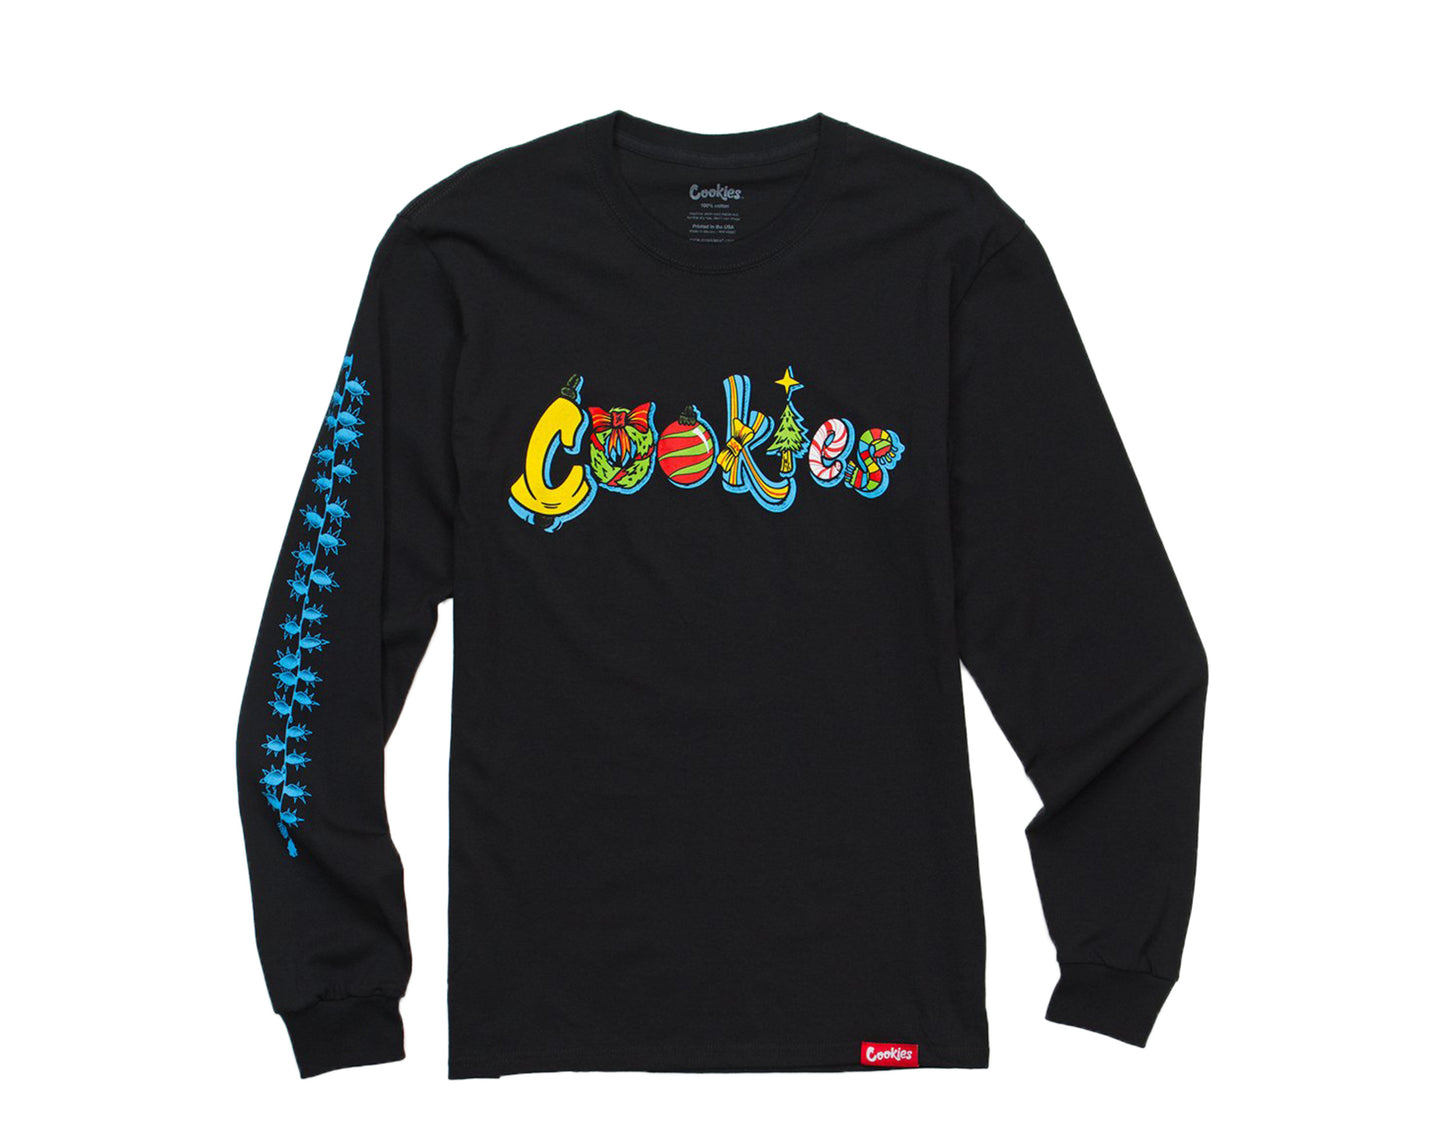 Cookies 'Tis The Season Long Sleeve Black Men's Tee Shirt 1546T4360-BLK